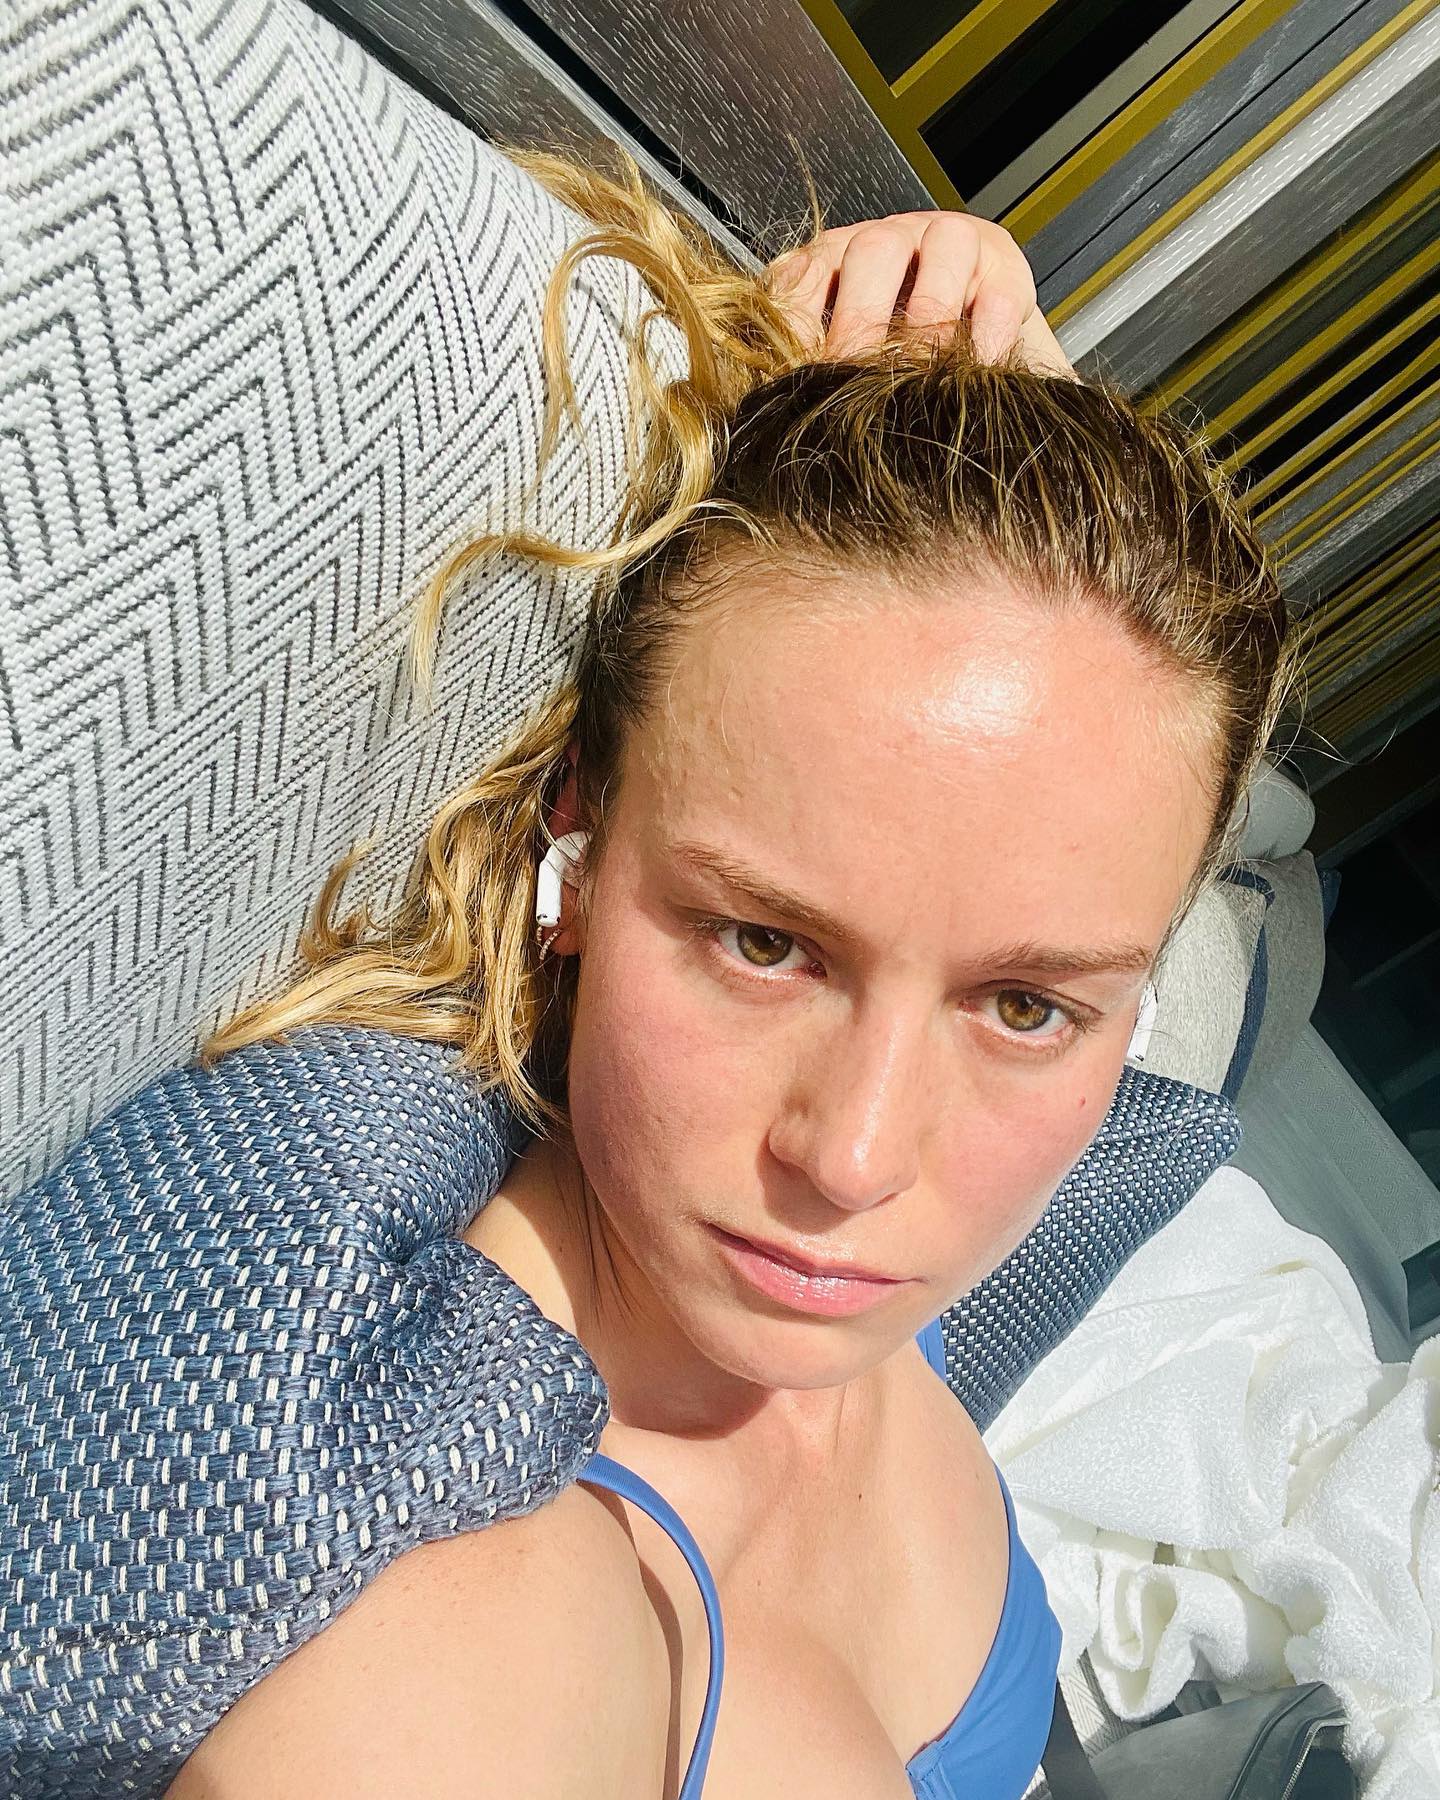 Brie Larson Bikini Pictures: Sexiest Swimsuit Photos